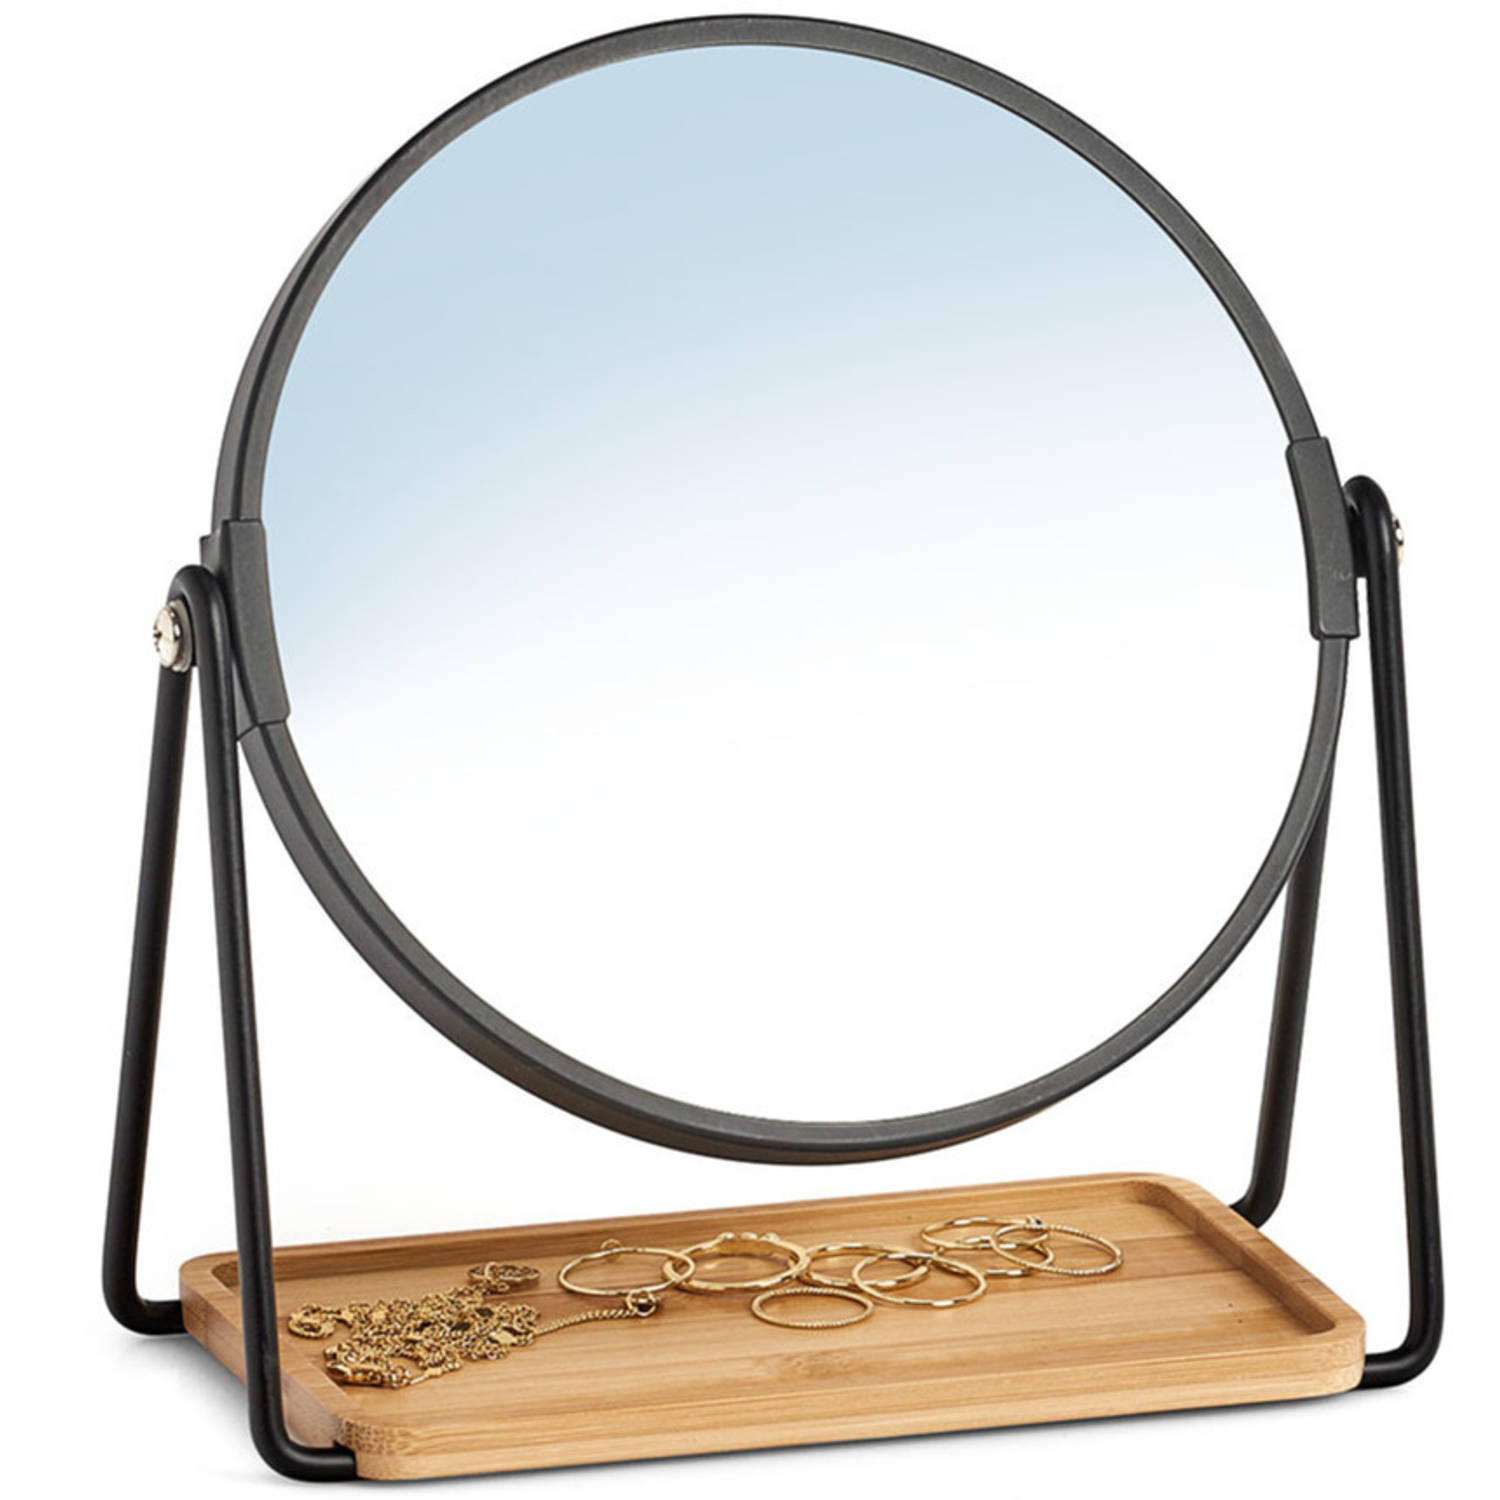 Kantine inhoud seinpaal Make-up spiegel metaal/bamboe 17,5 x 20,5 cm - Make-up spiegeltjes | Blokker